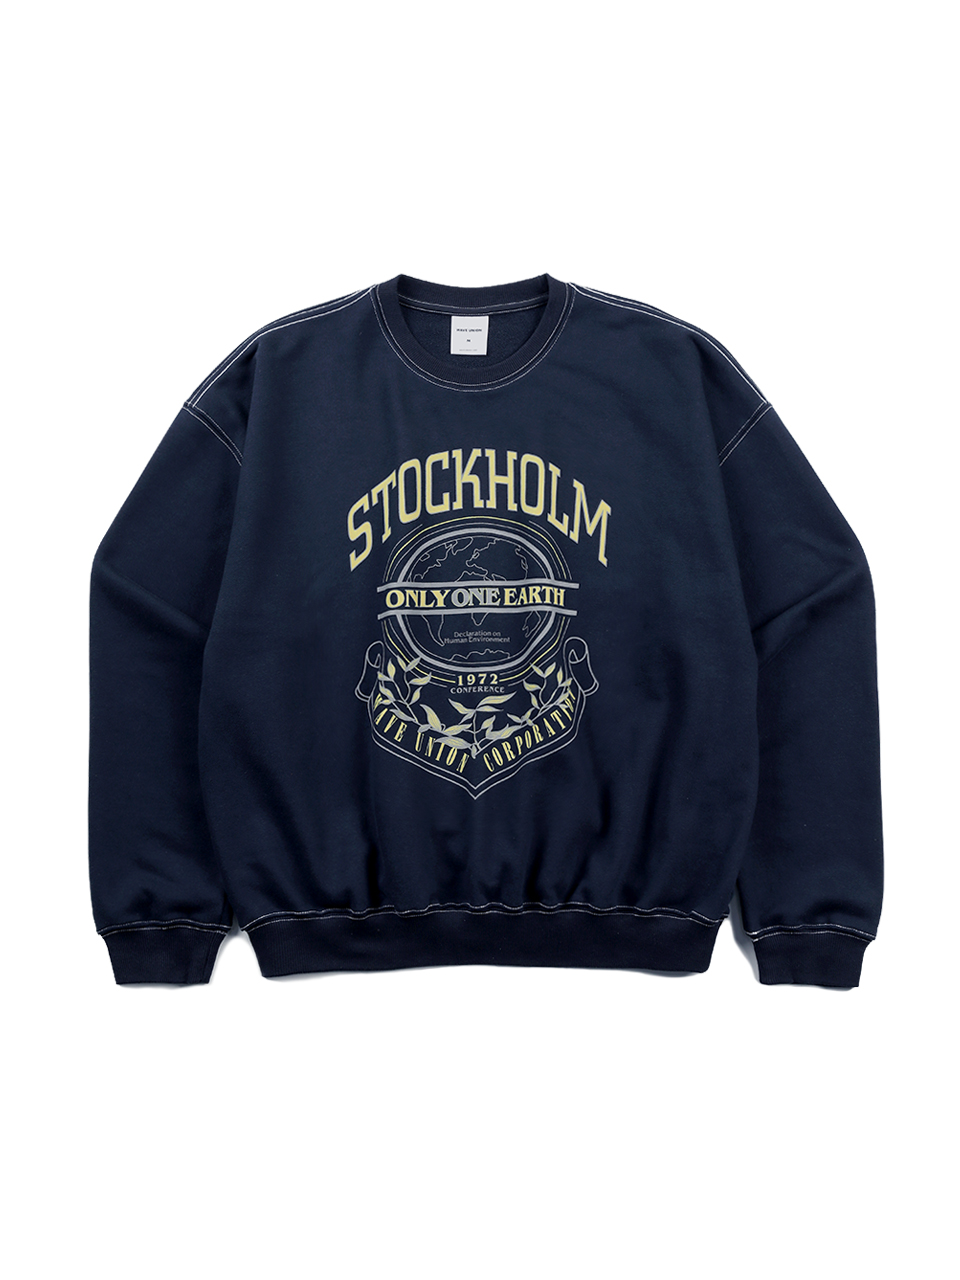 Stockholm Oversized fit Sweatshirt navy[예약배송 02월26일]